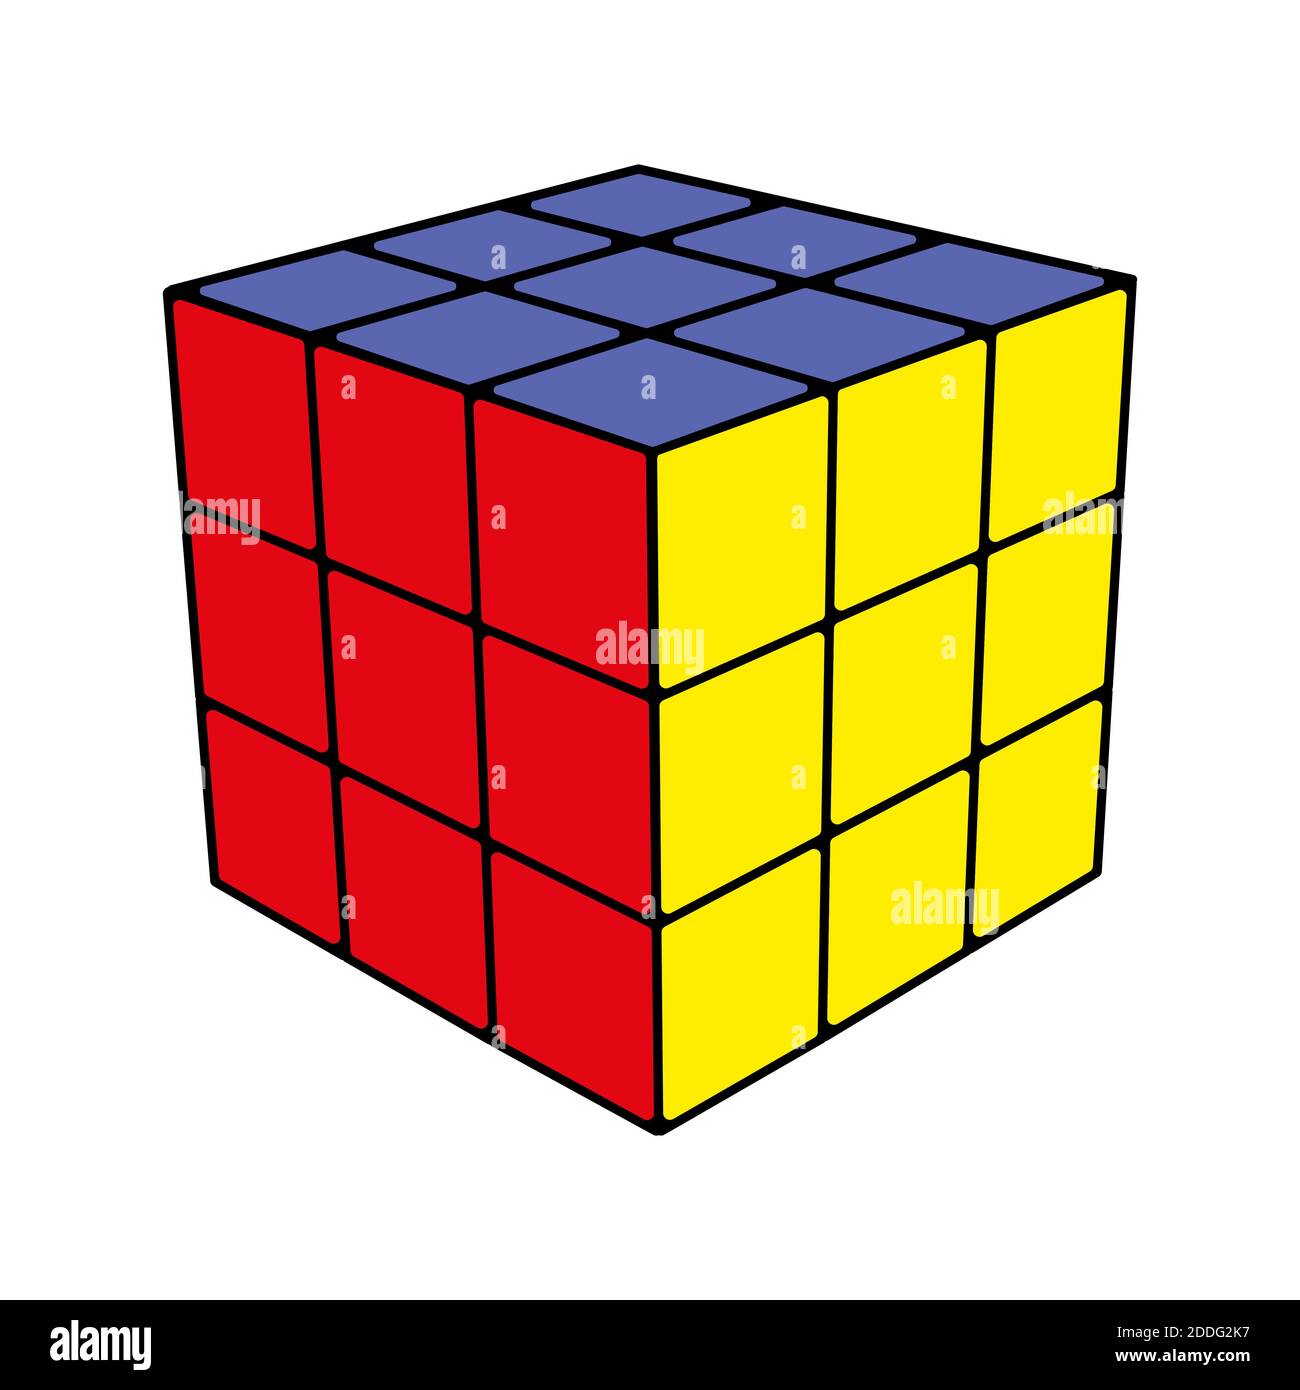 9,498 Rubiks Cube Images, Stock Photos, 3D objects, & Vectors